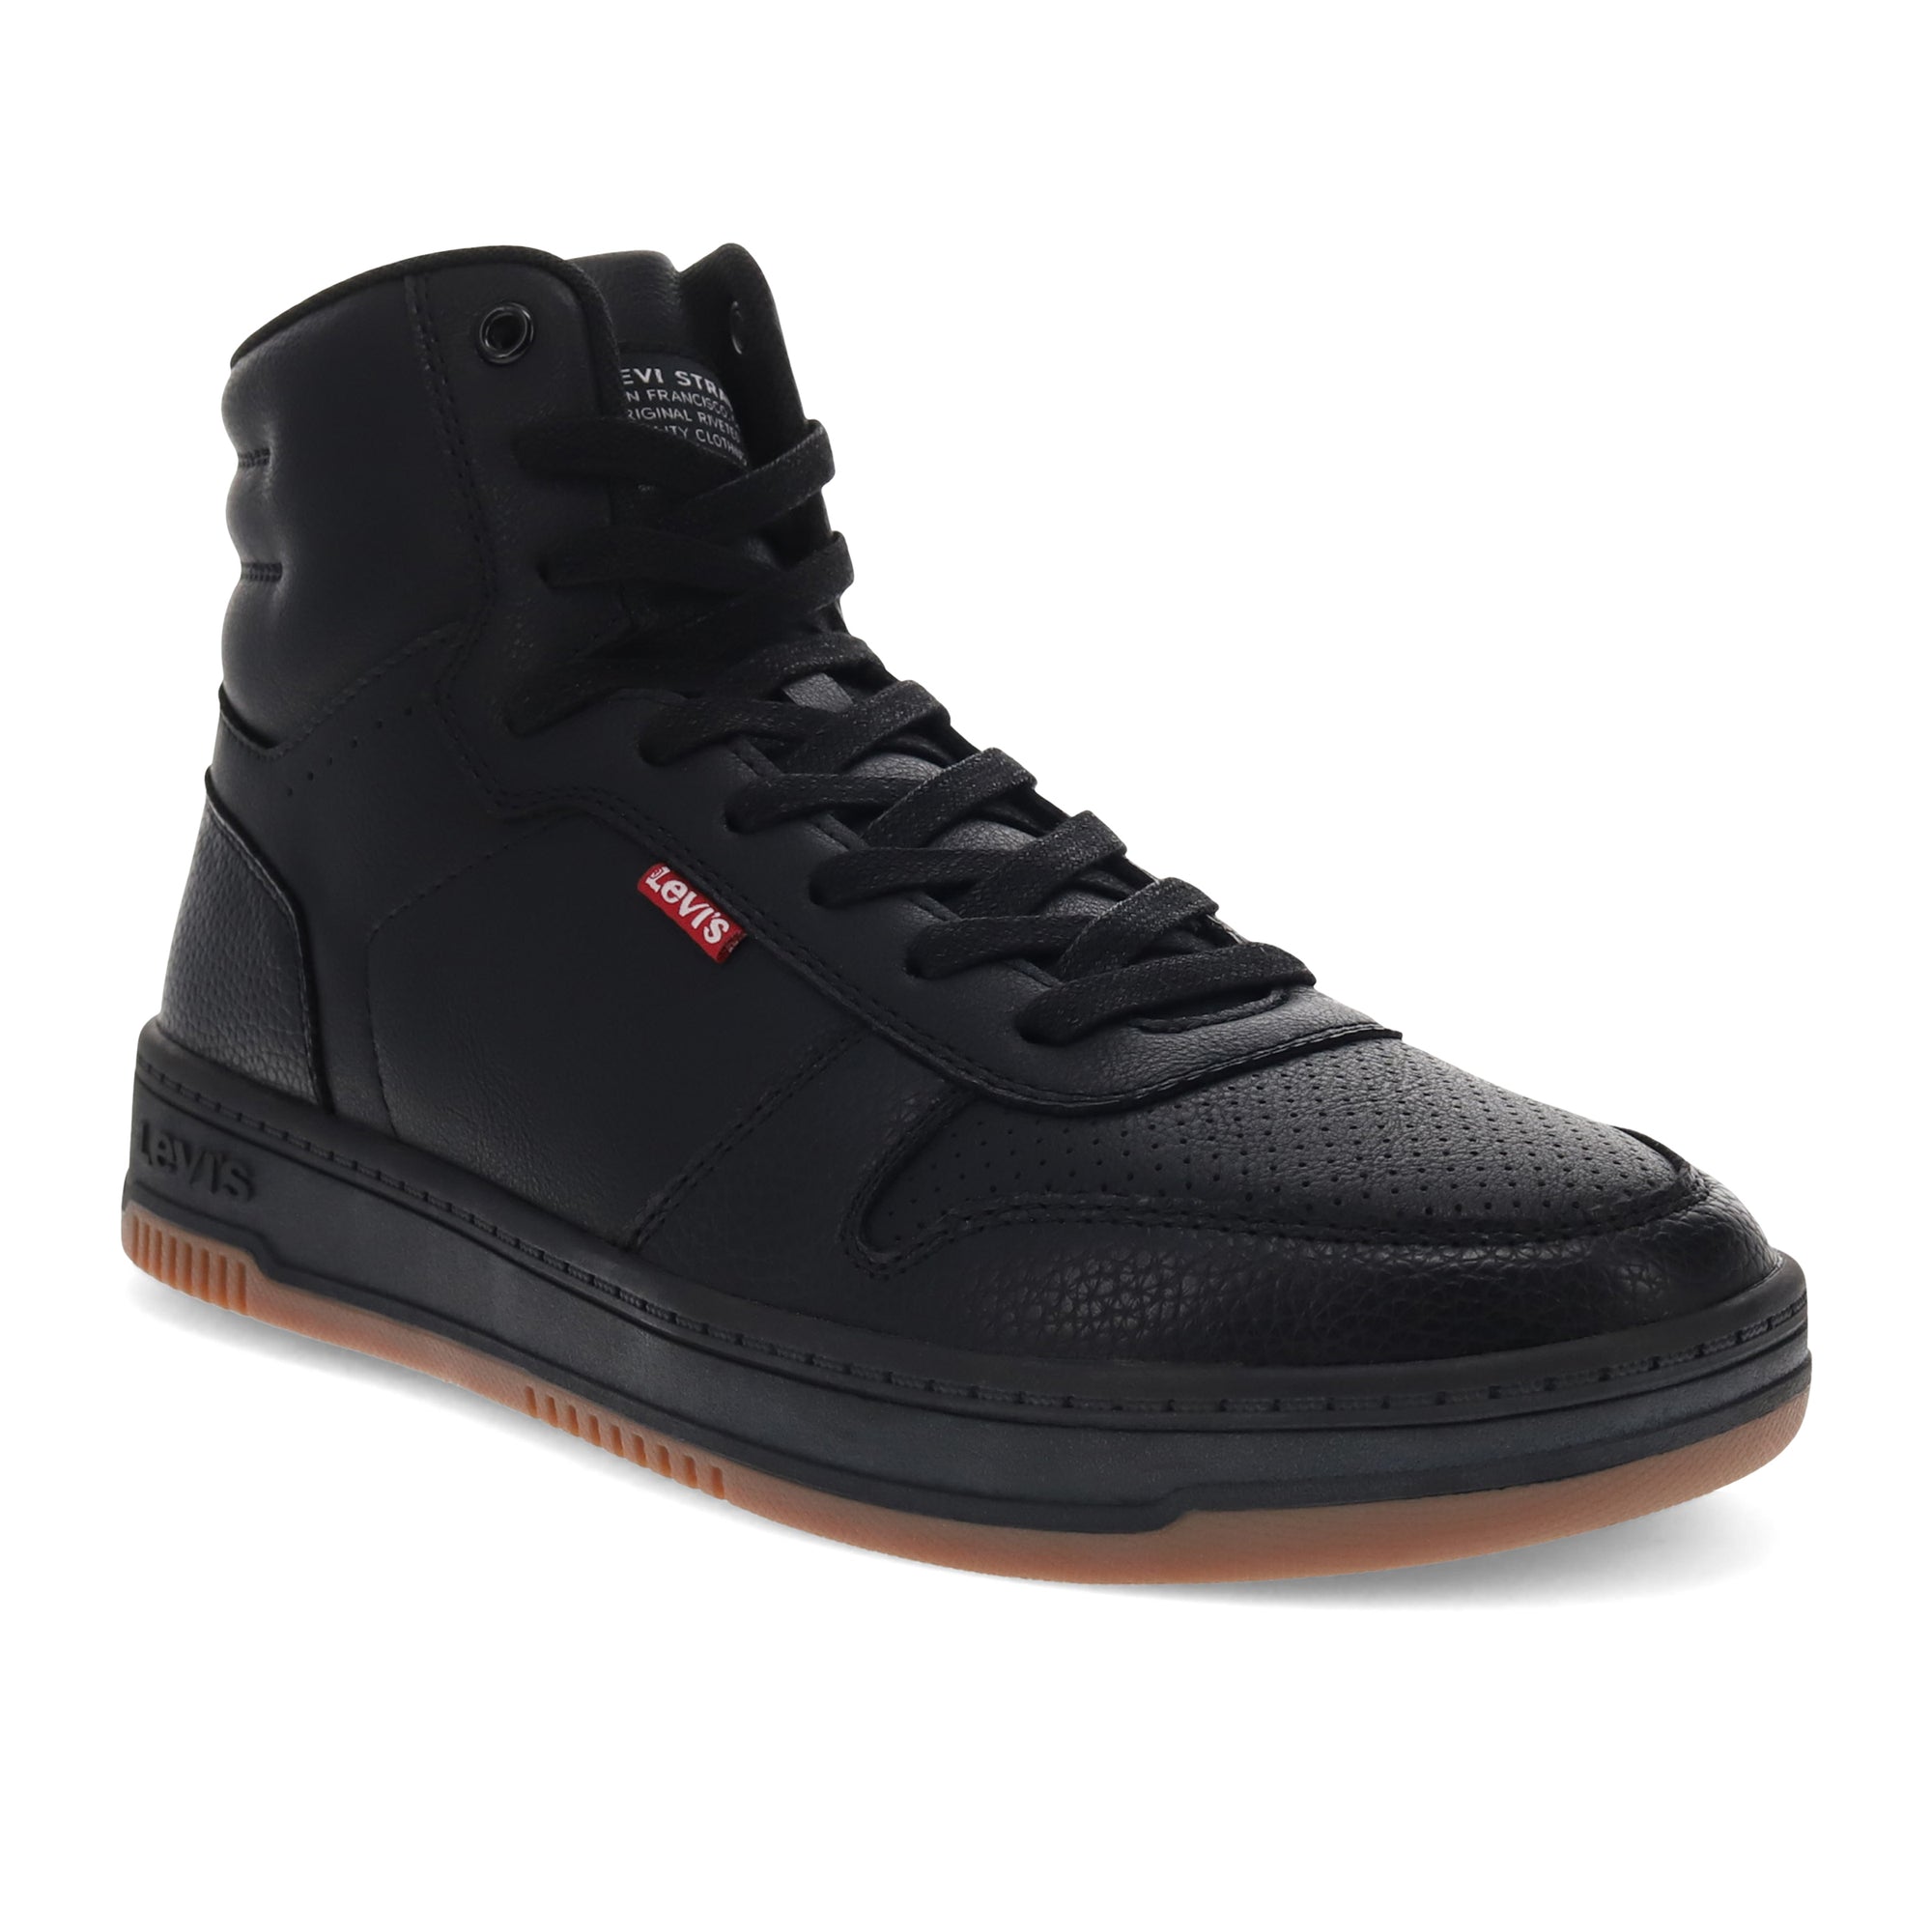 Black/Gum-Levi's Mens Drive Hi Vegan Synthetic Leather Casual Hightop Sneaker Shoe